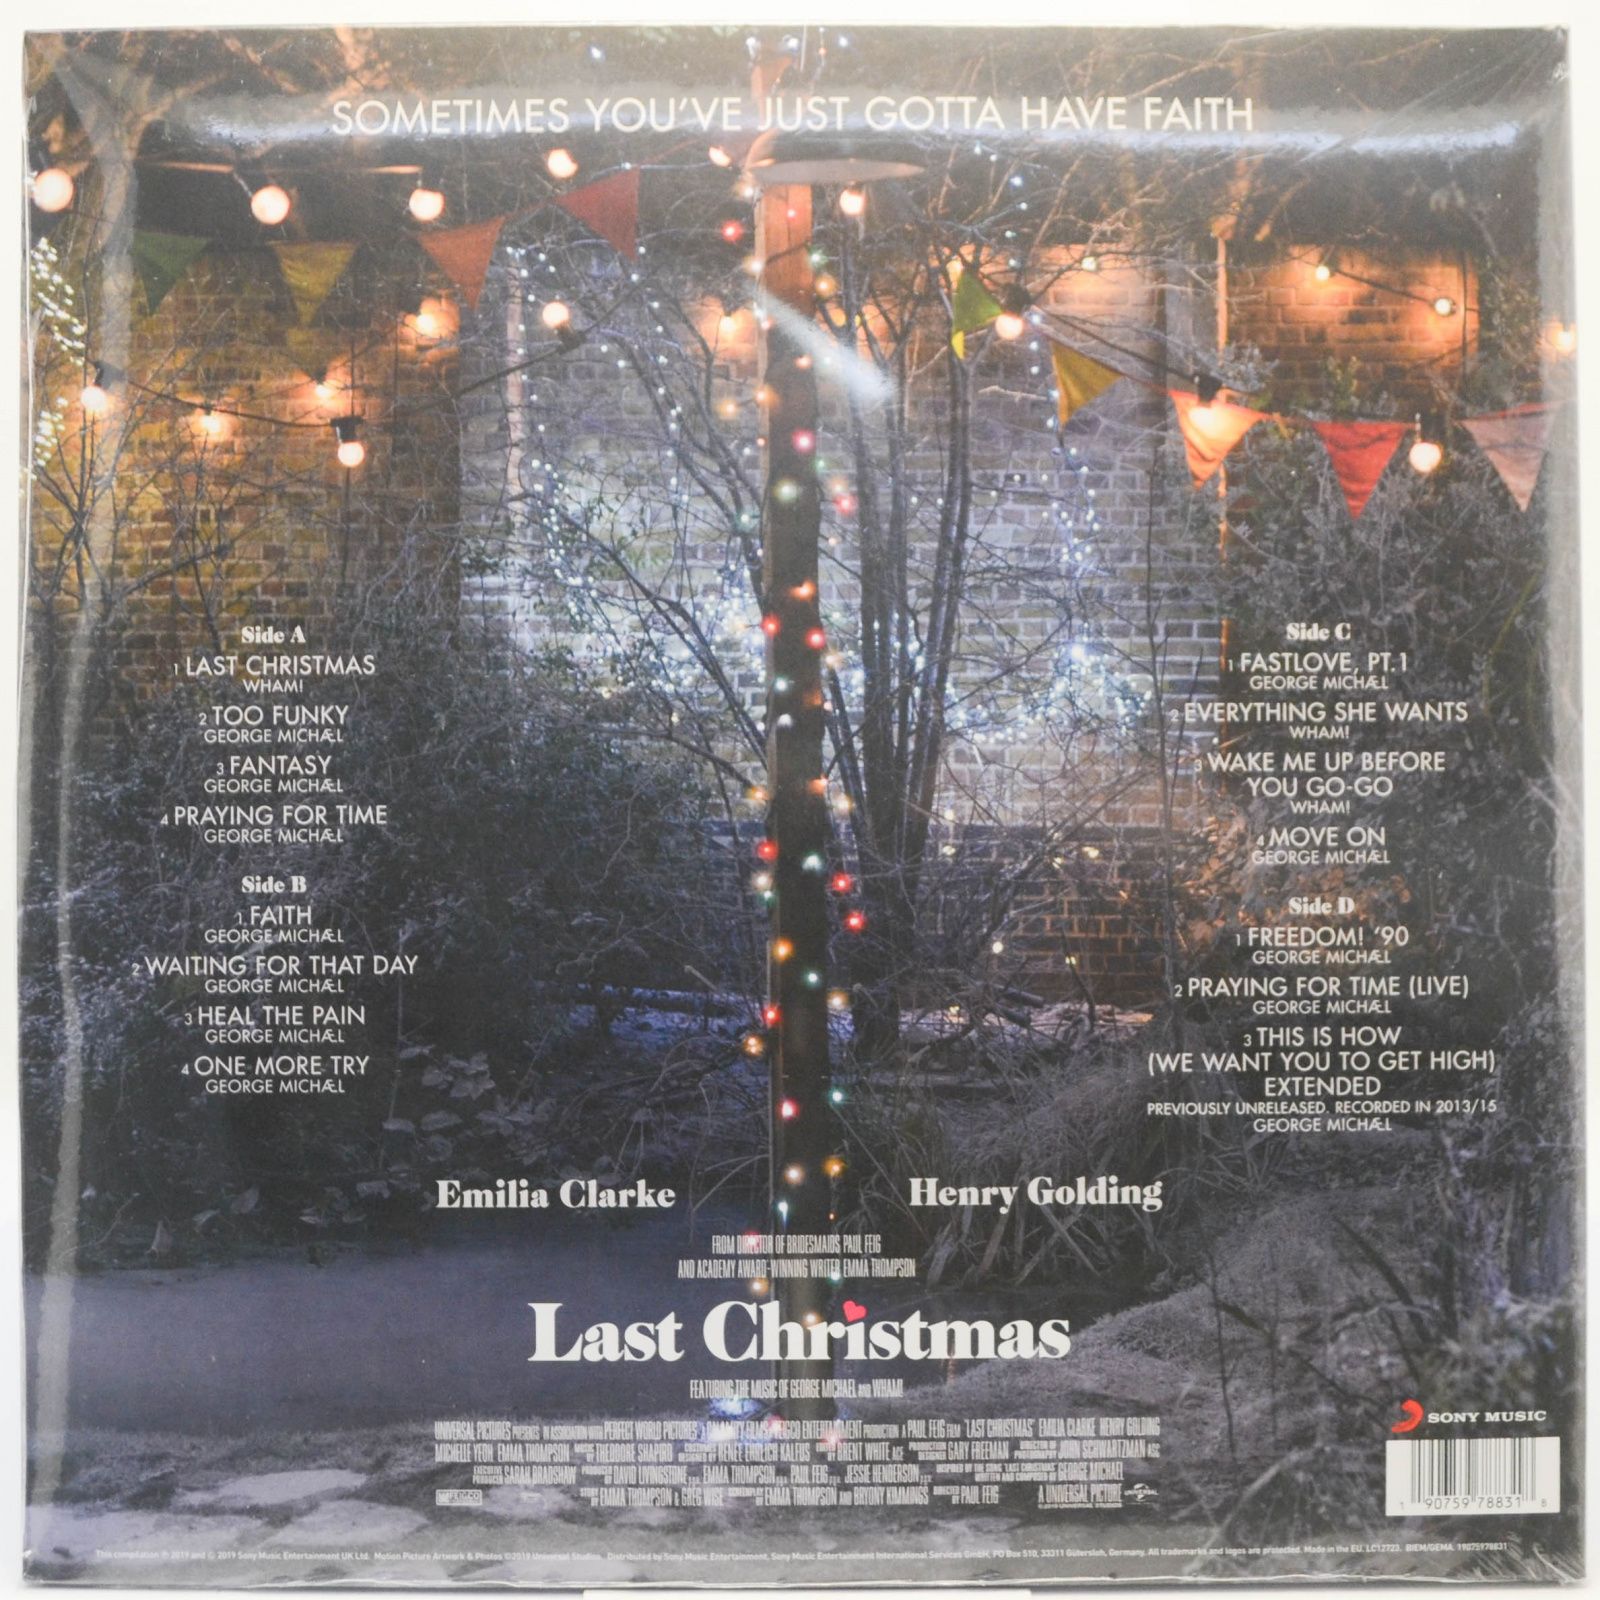 George Michael & Wham! — Last Christmas (The Original Motion Picture Soundtrack) (2LP), 2019